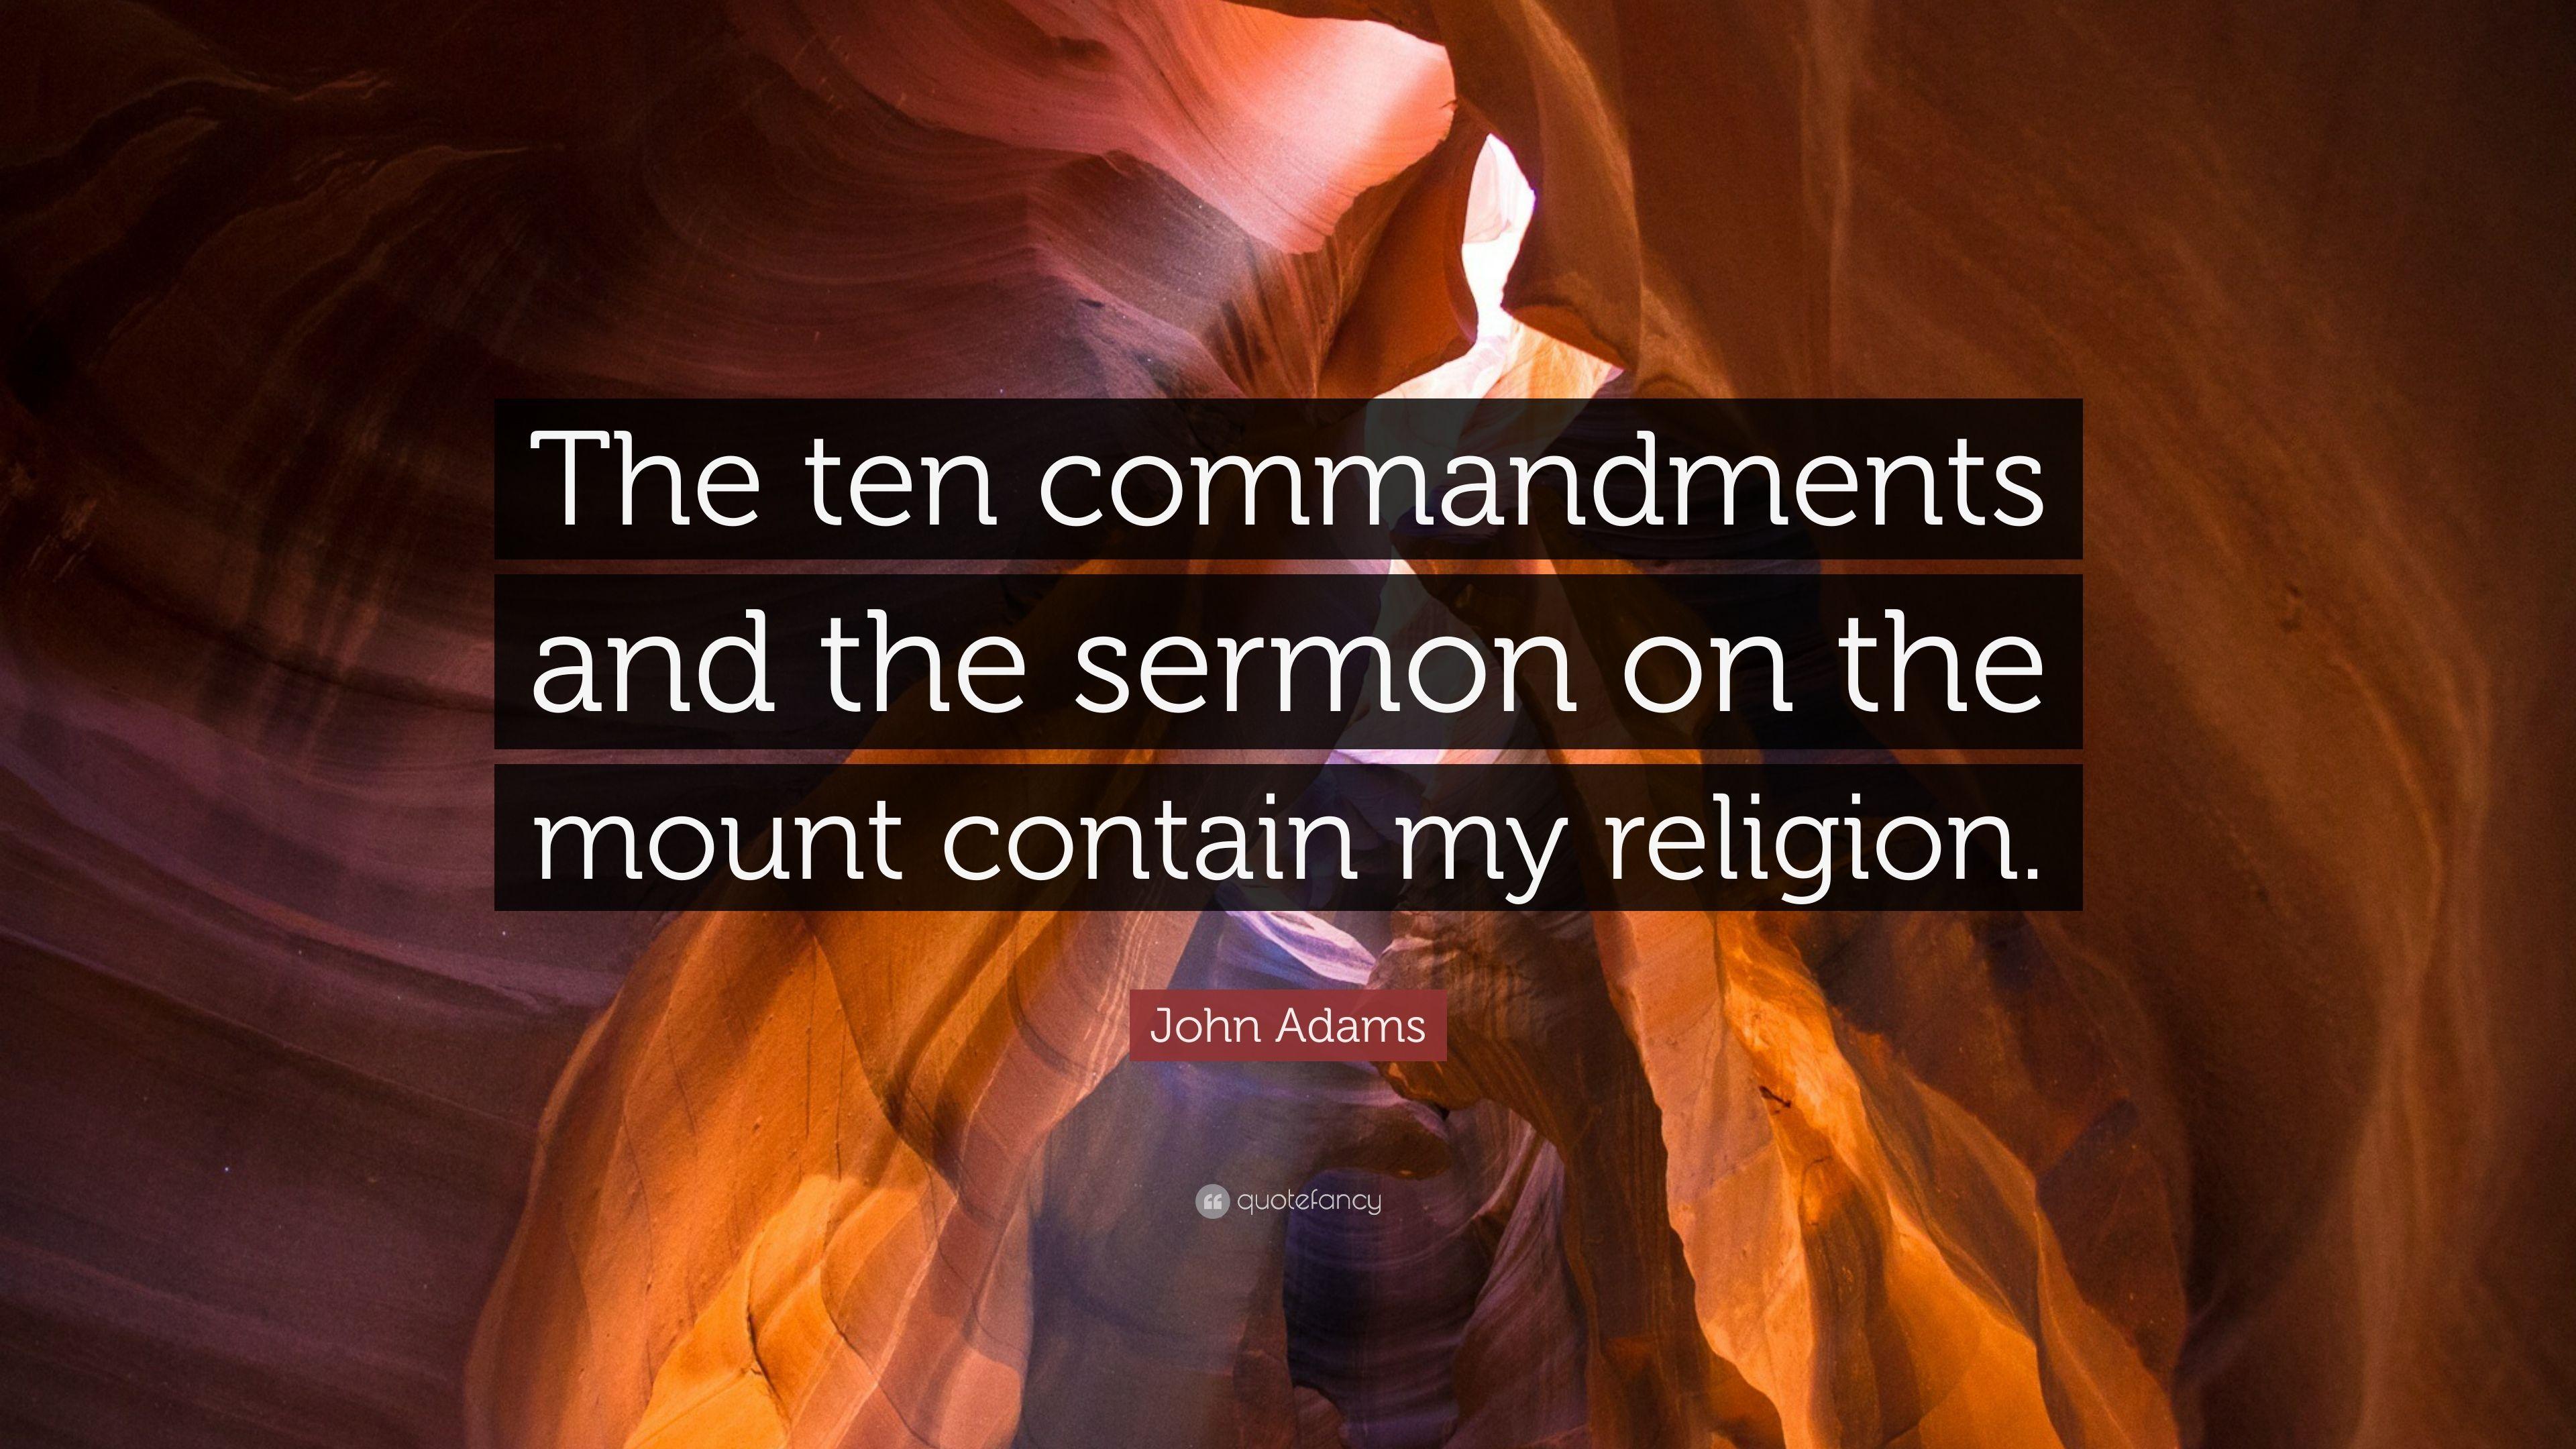 John Adams Quote: “The ten commandments and the sermon on